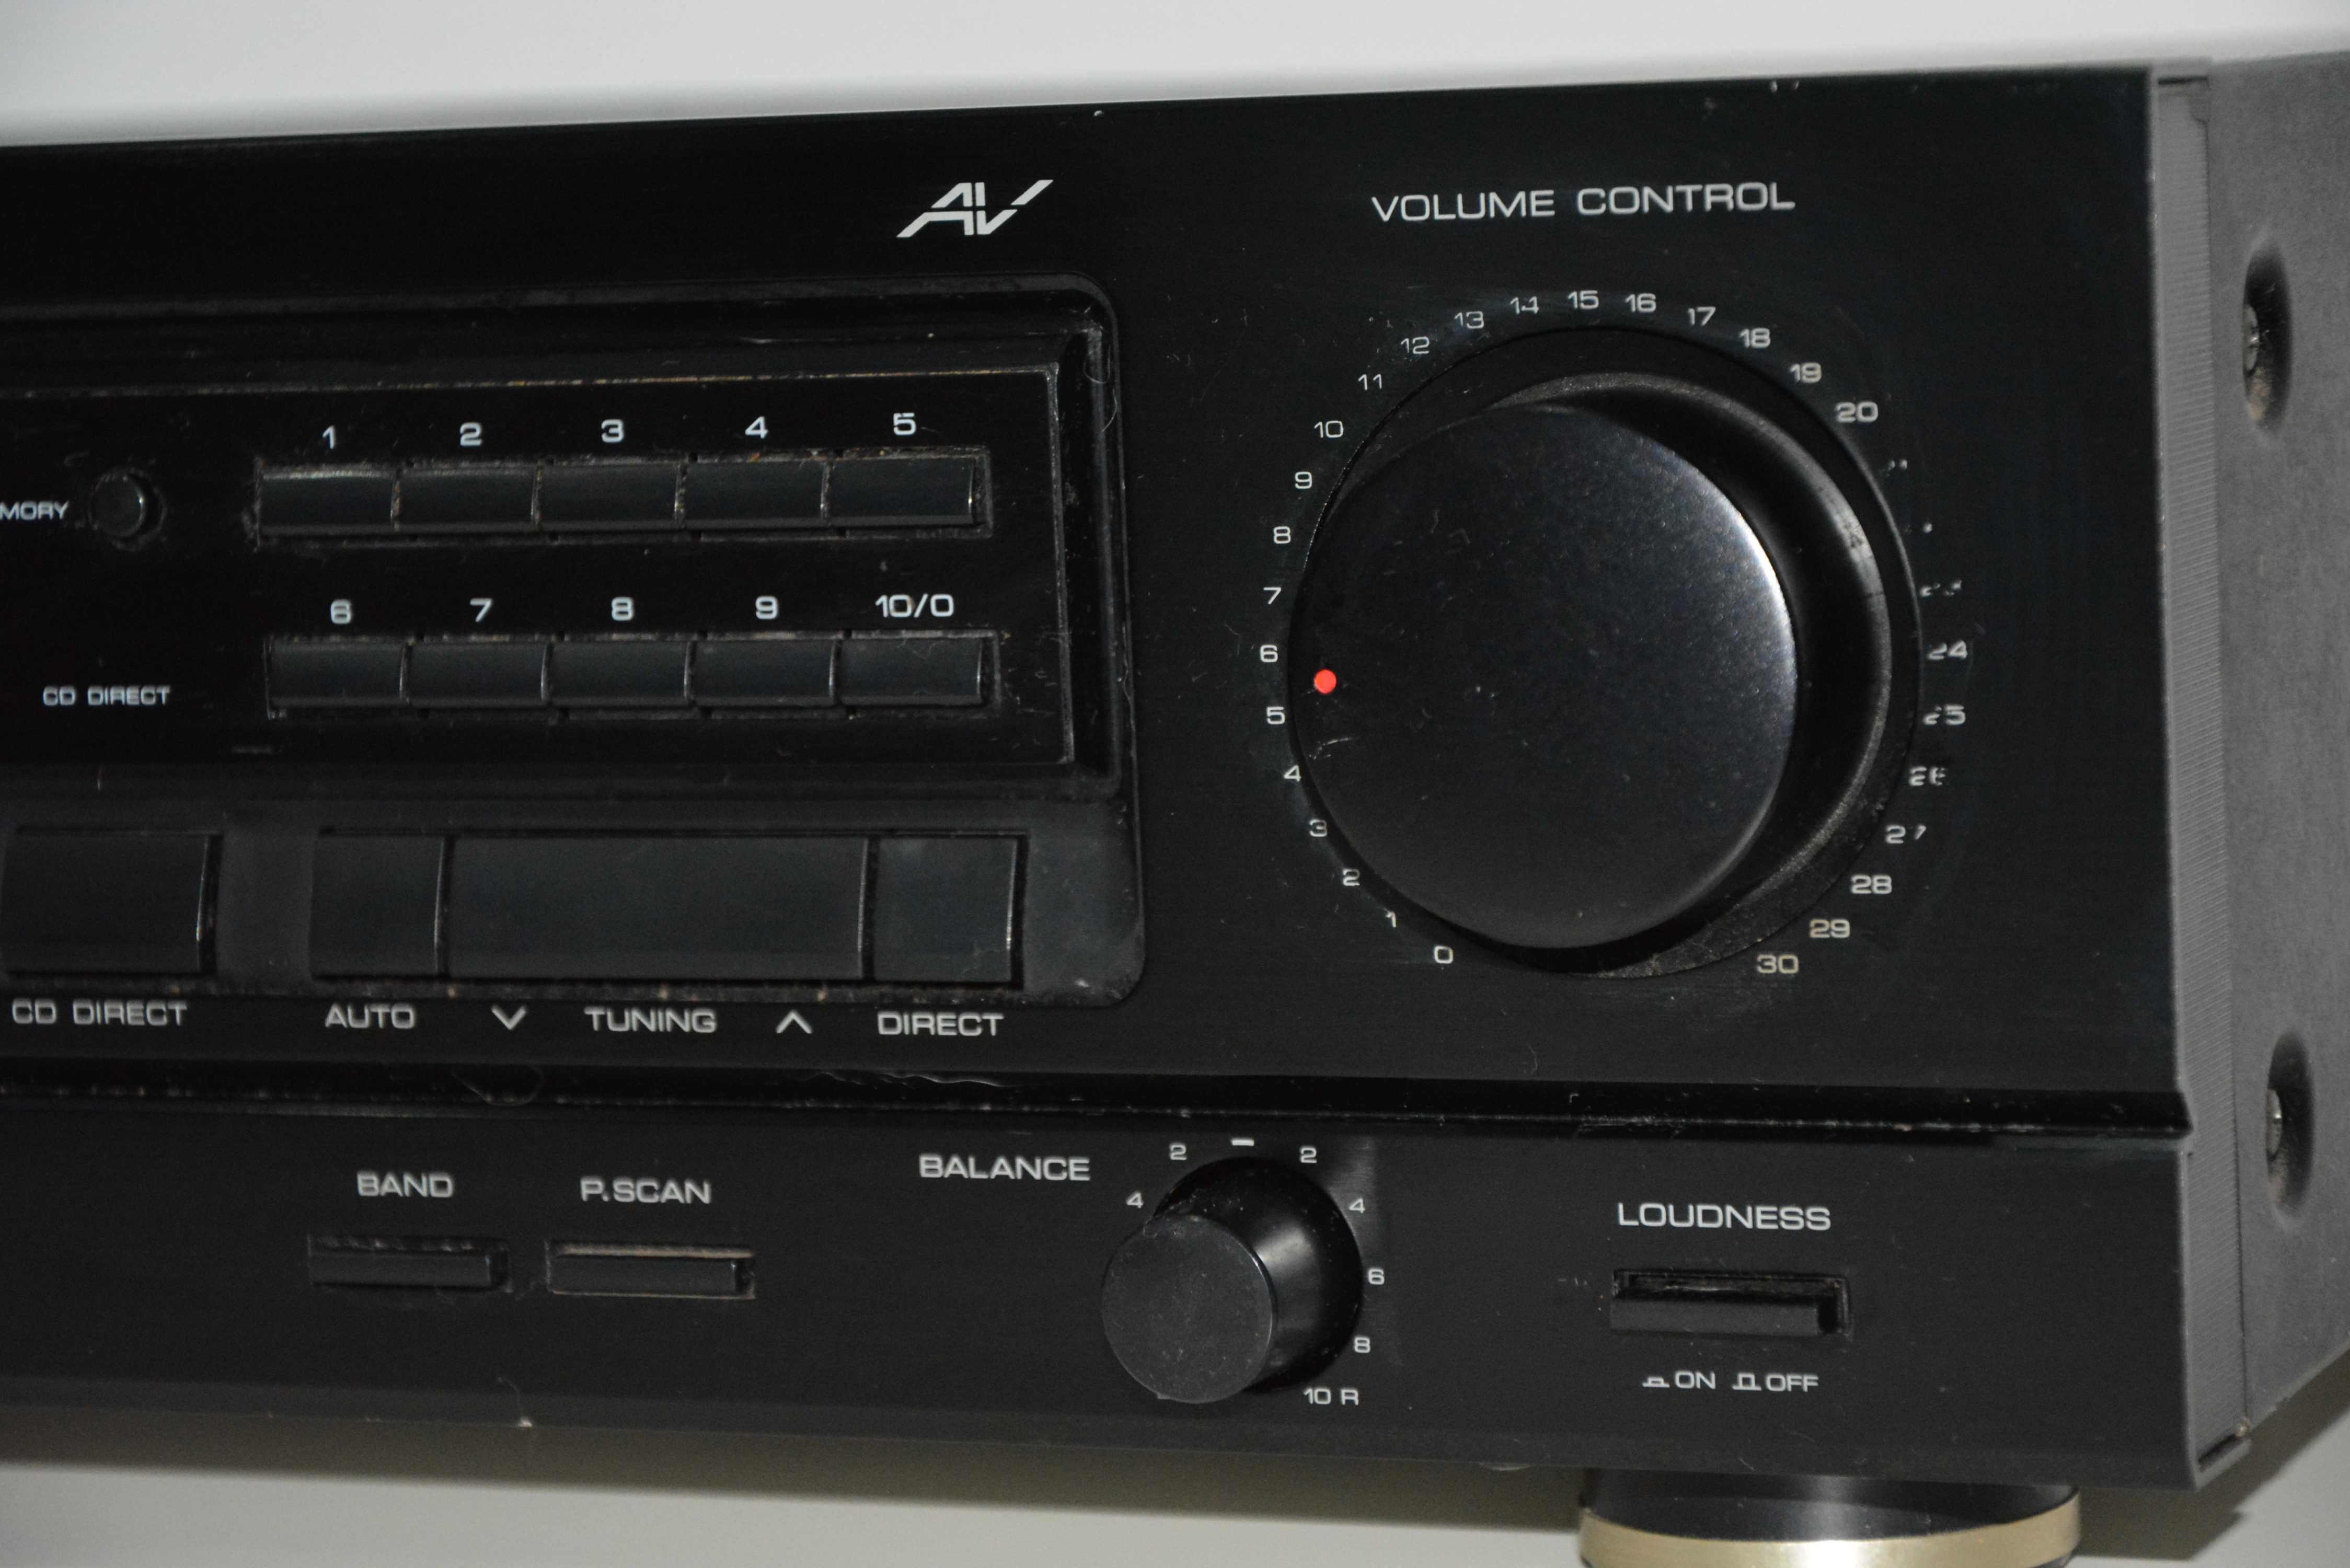 Wzmacniacz - Amplituner Stereo KENWOOD KR-A5020